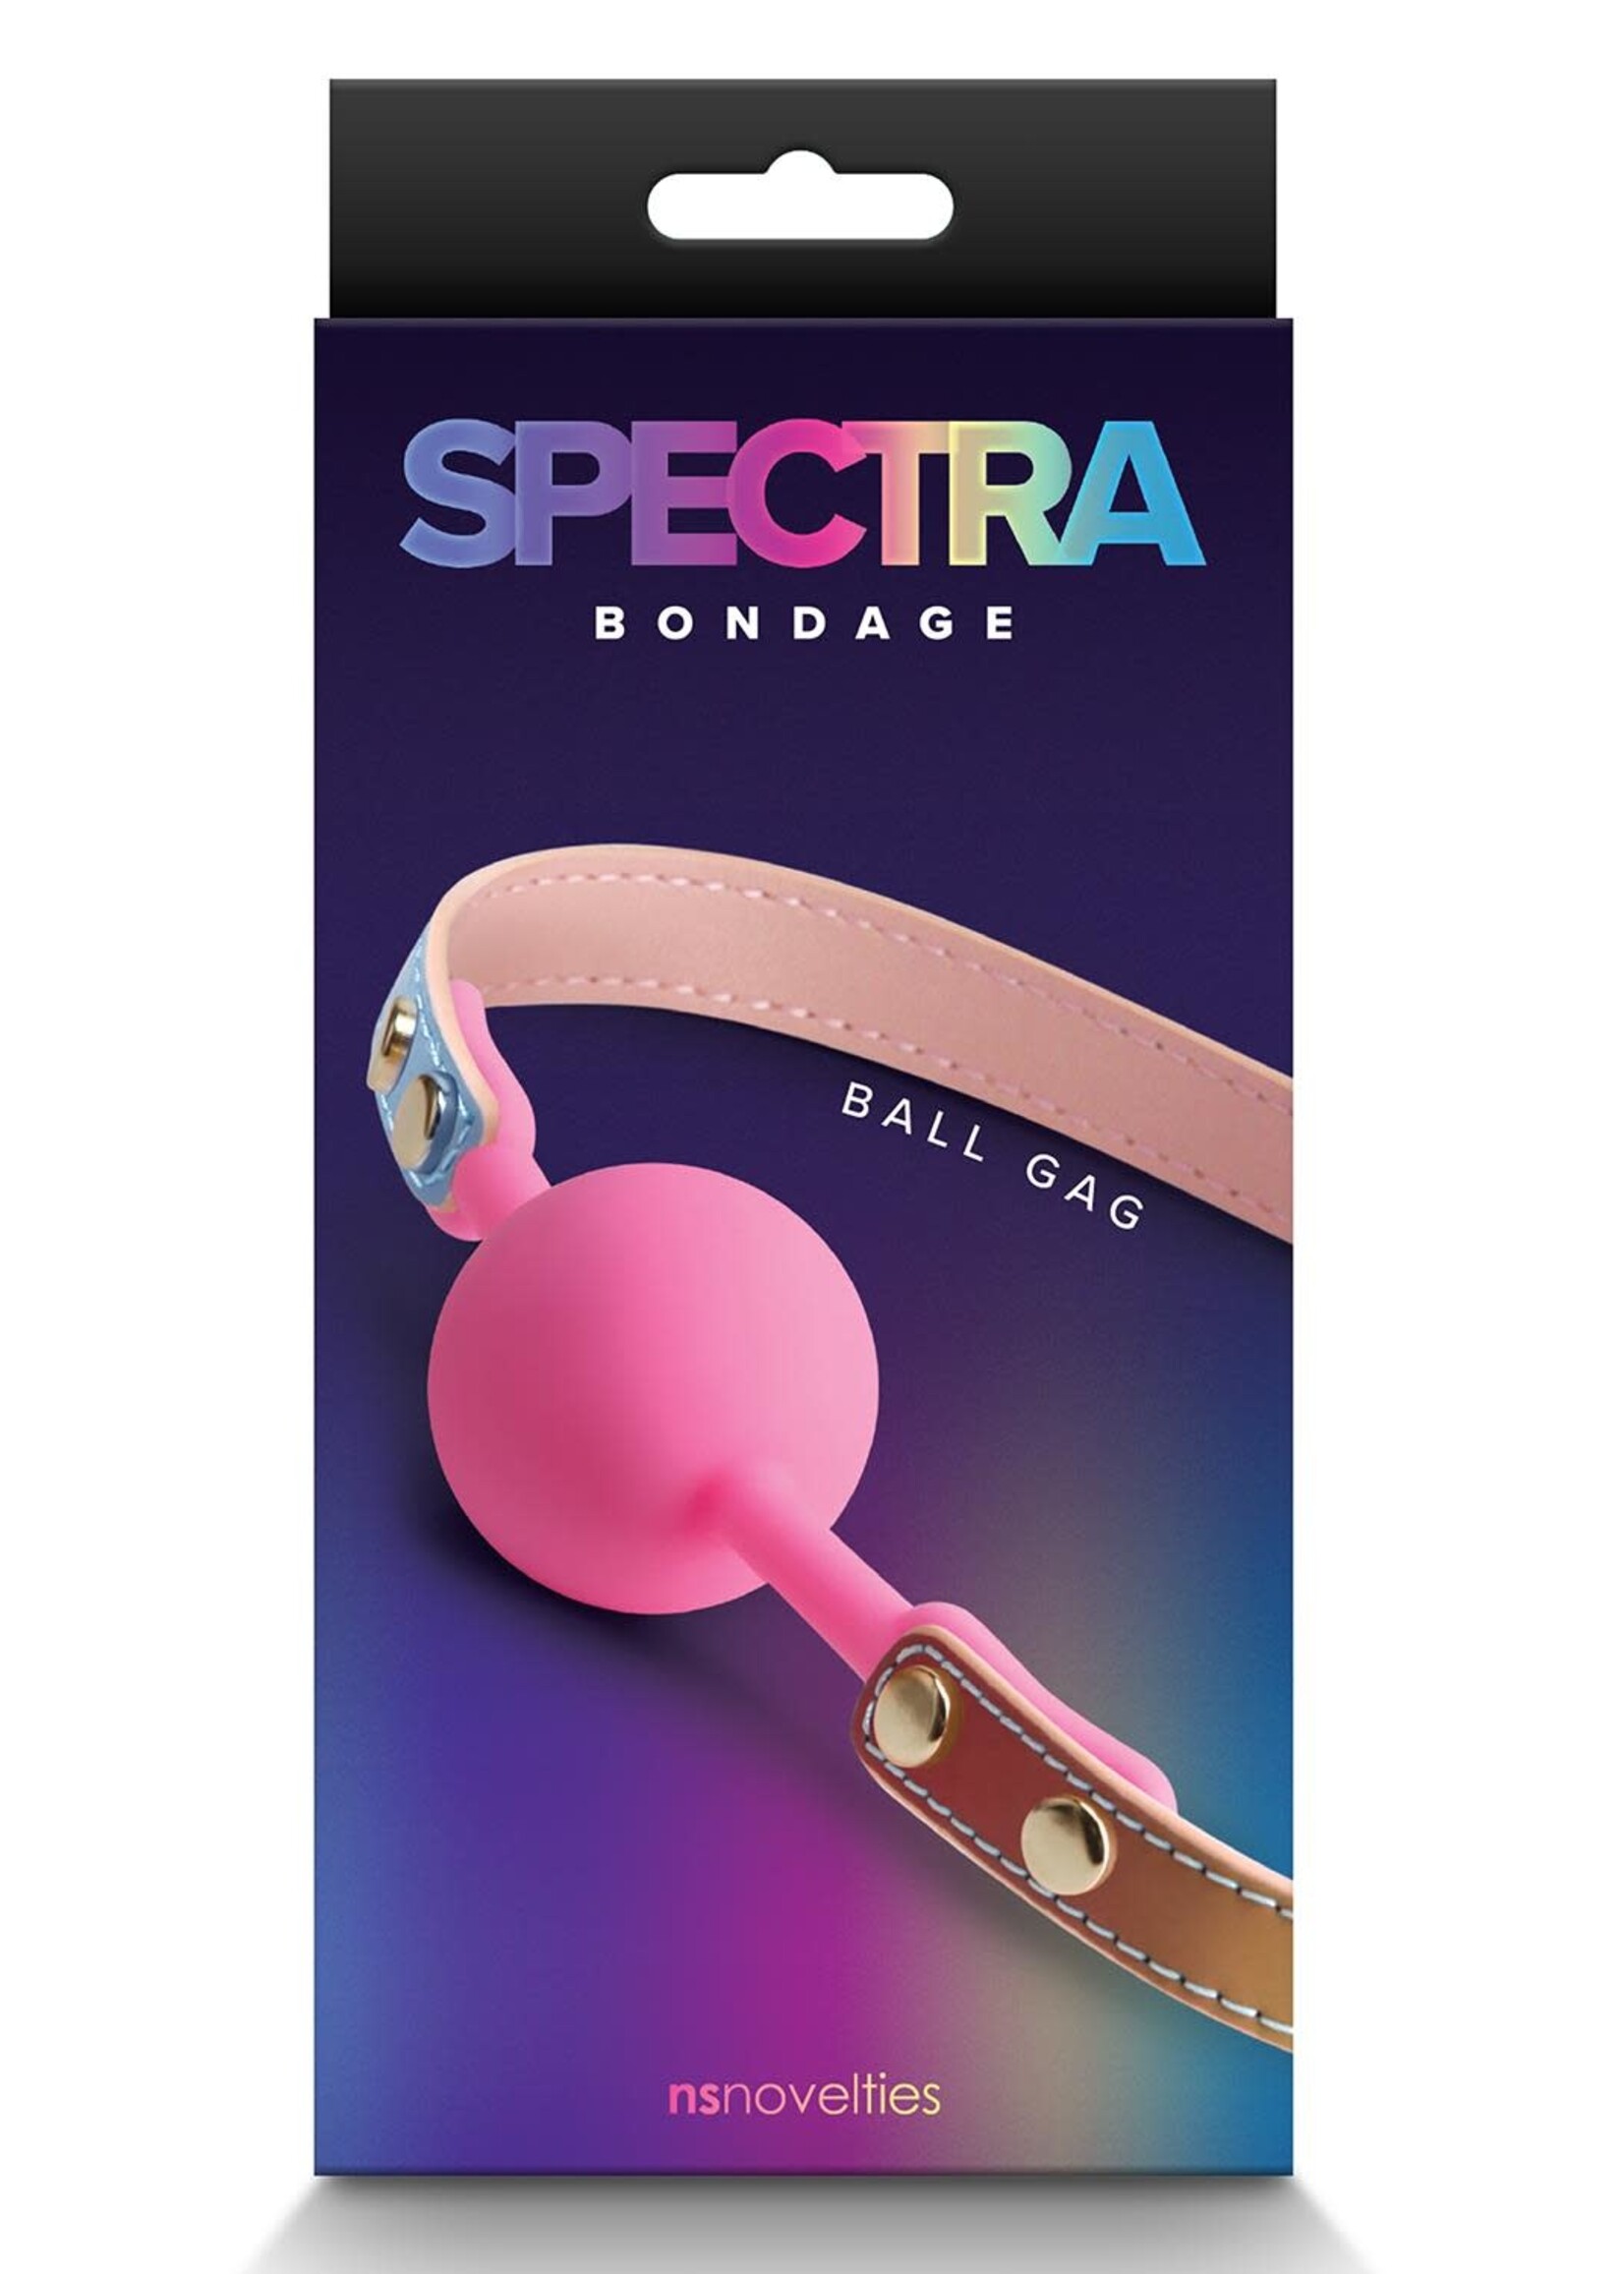 NS Novelties Spectra bondage ballgag rainbow